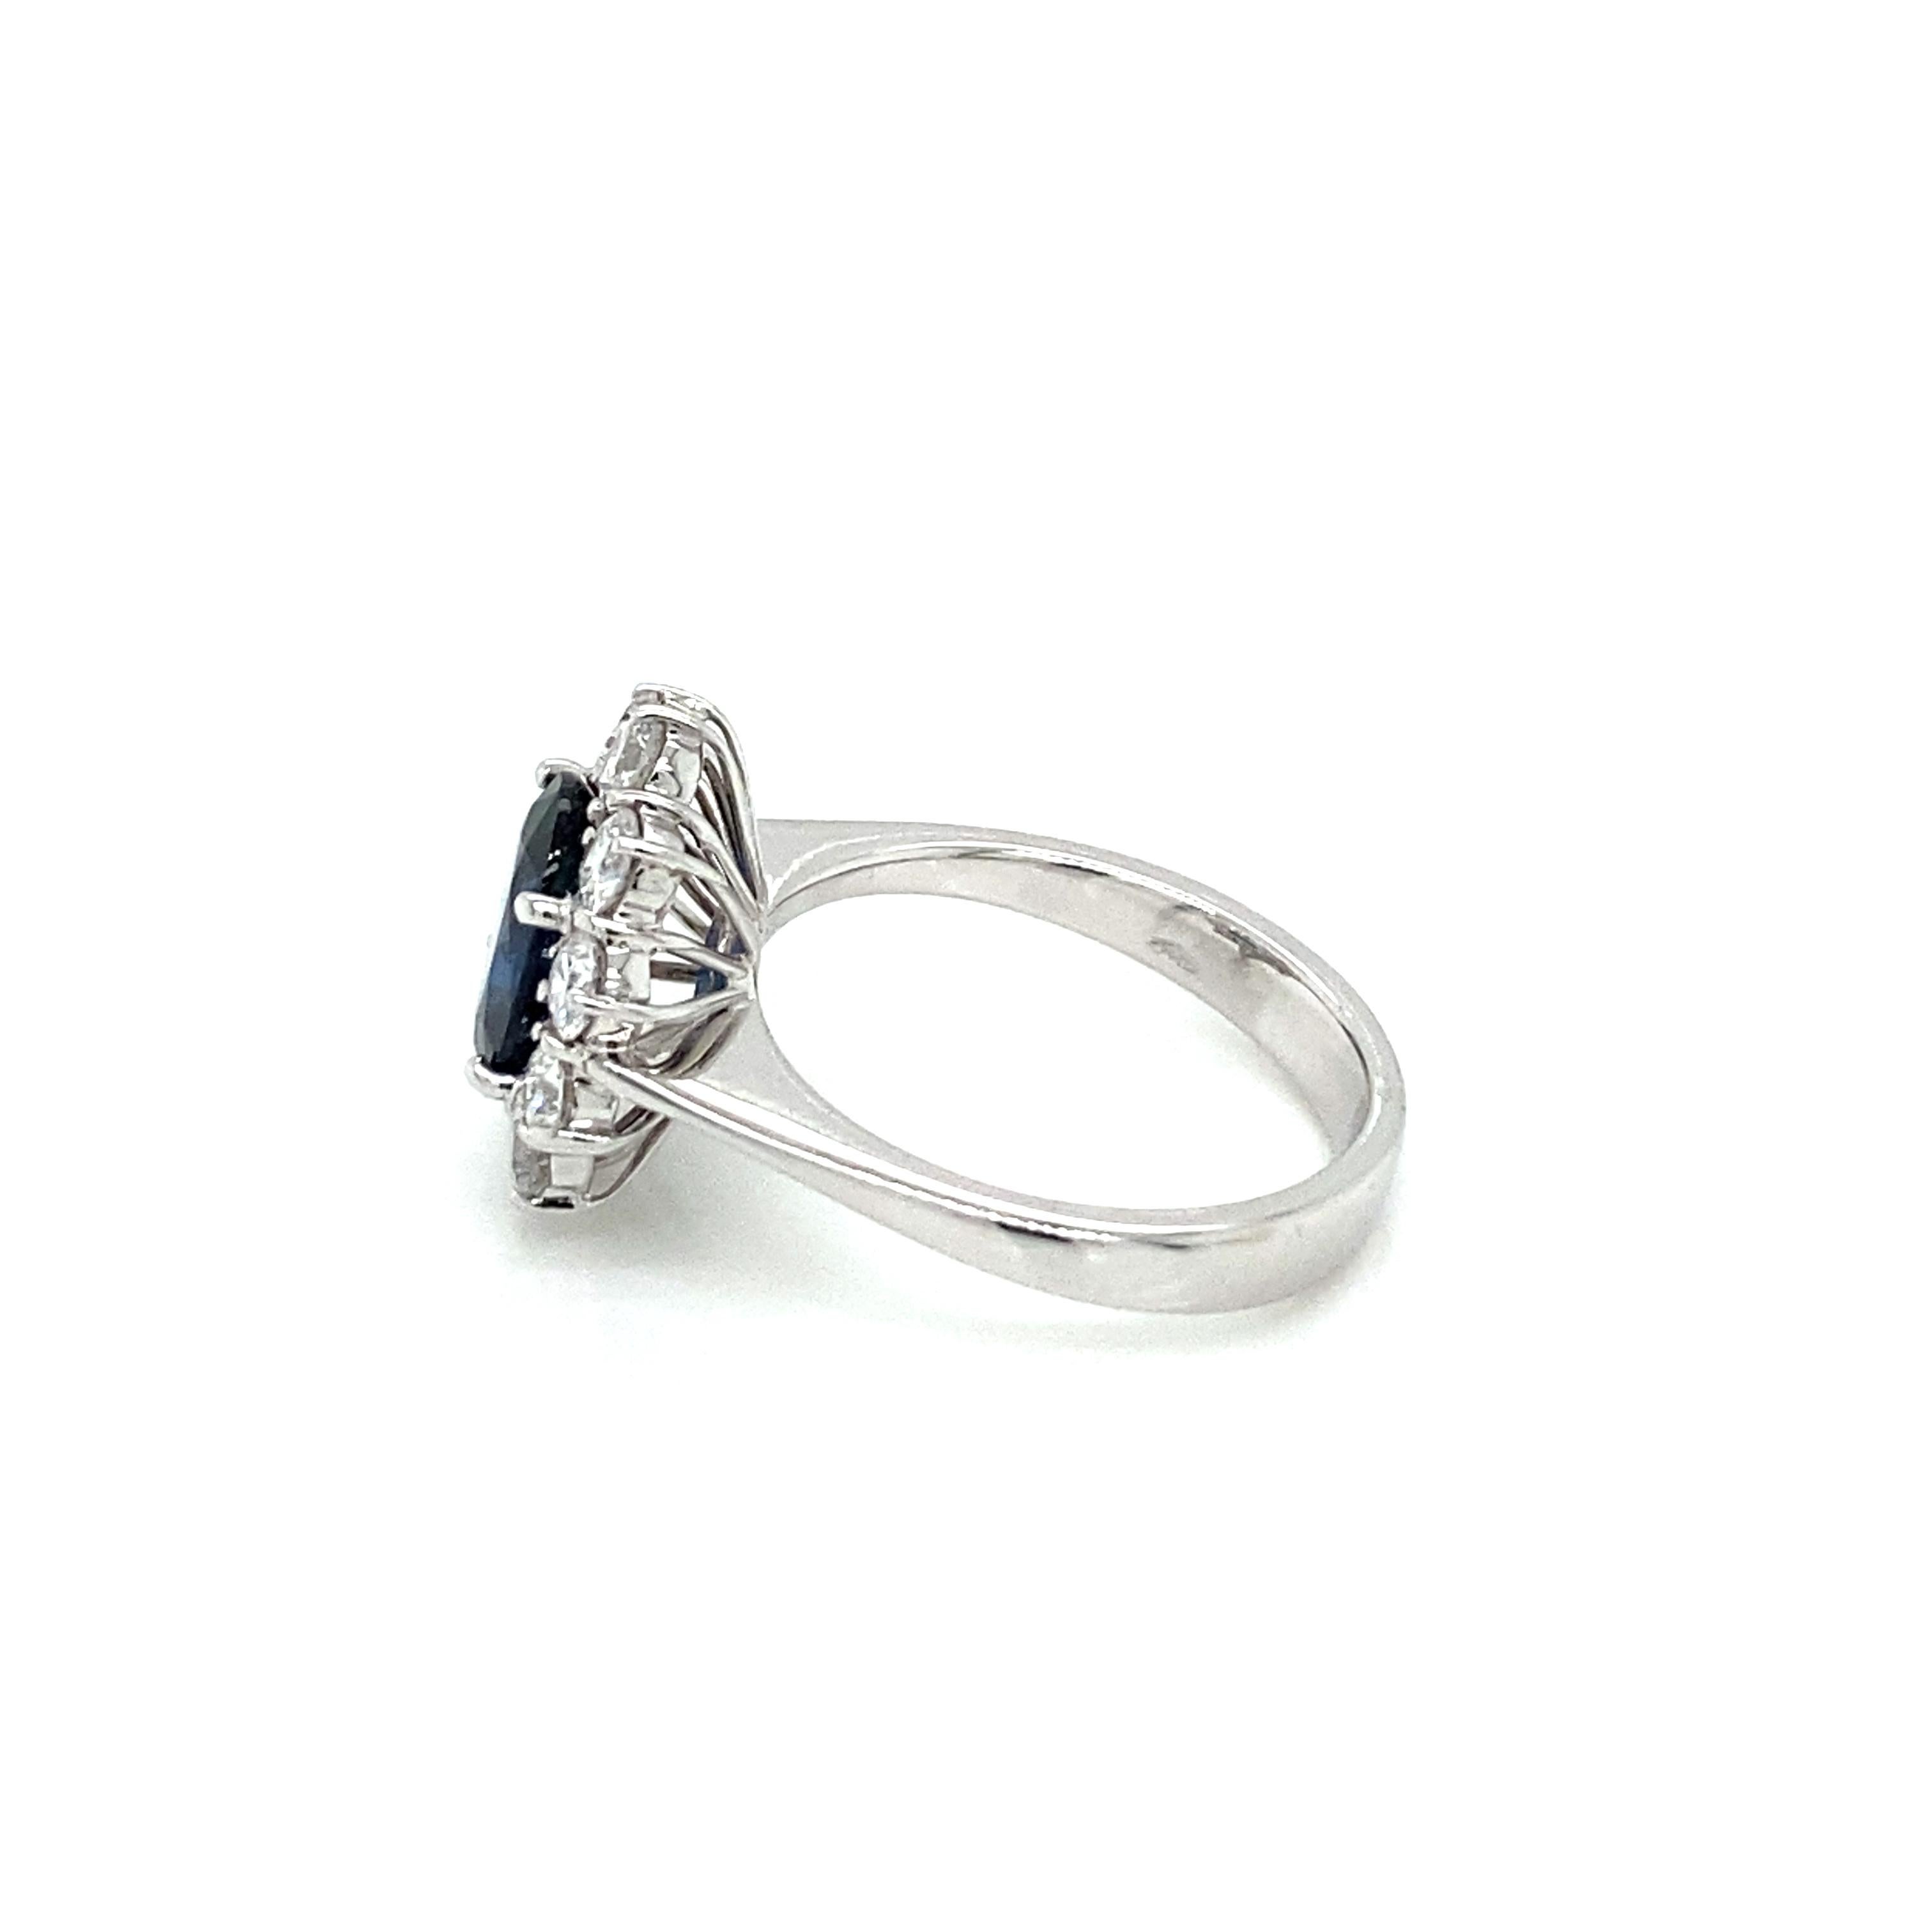 Certified 2.10 Carat Unheated Burma Sapphire Diamond Engagement Ring 3